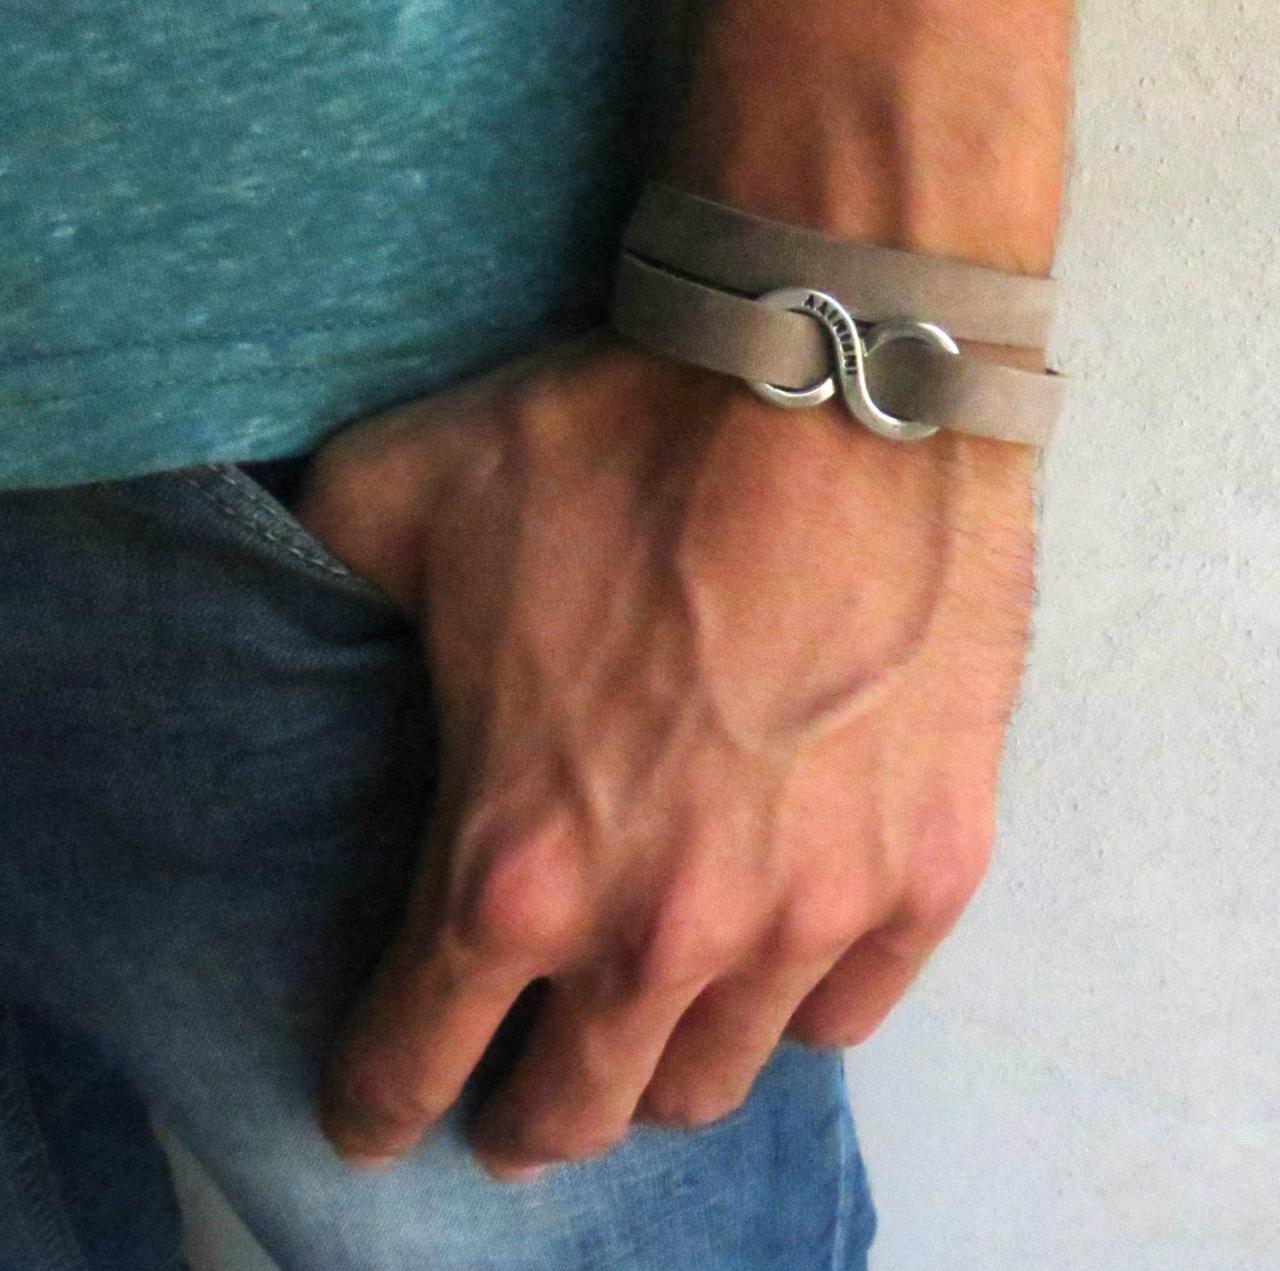 Men's Bracelet - Men's Infinity Bracelet - Men's Gray Bracelet - Men's Leather Bracelet - Men's